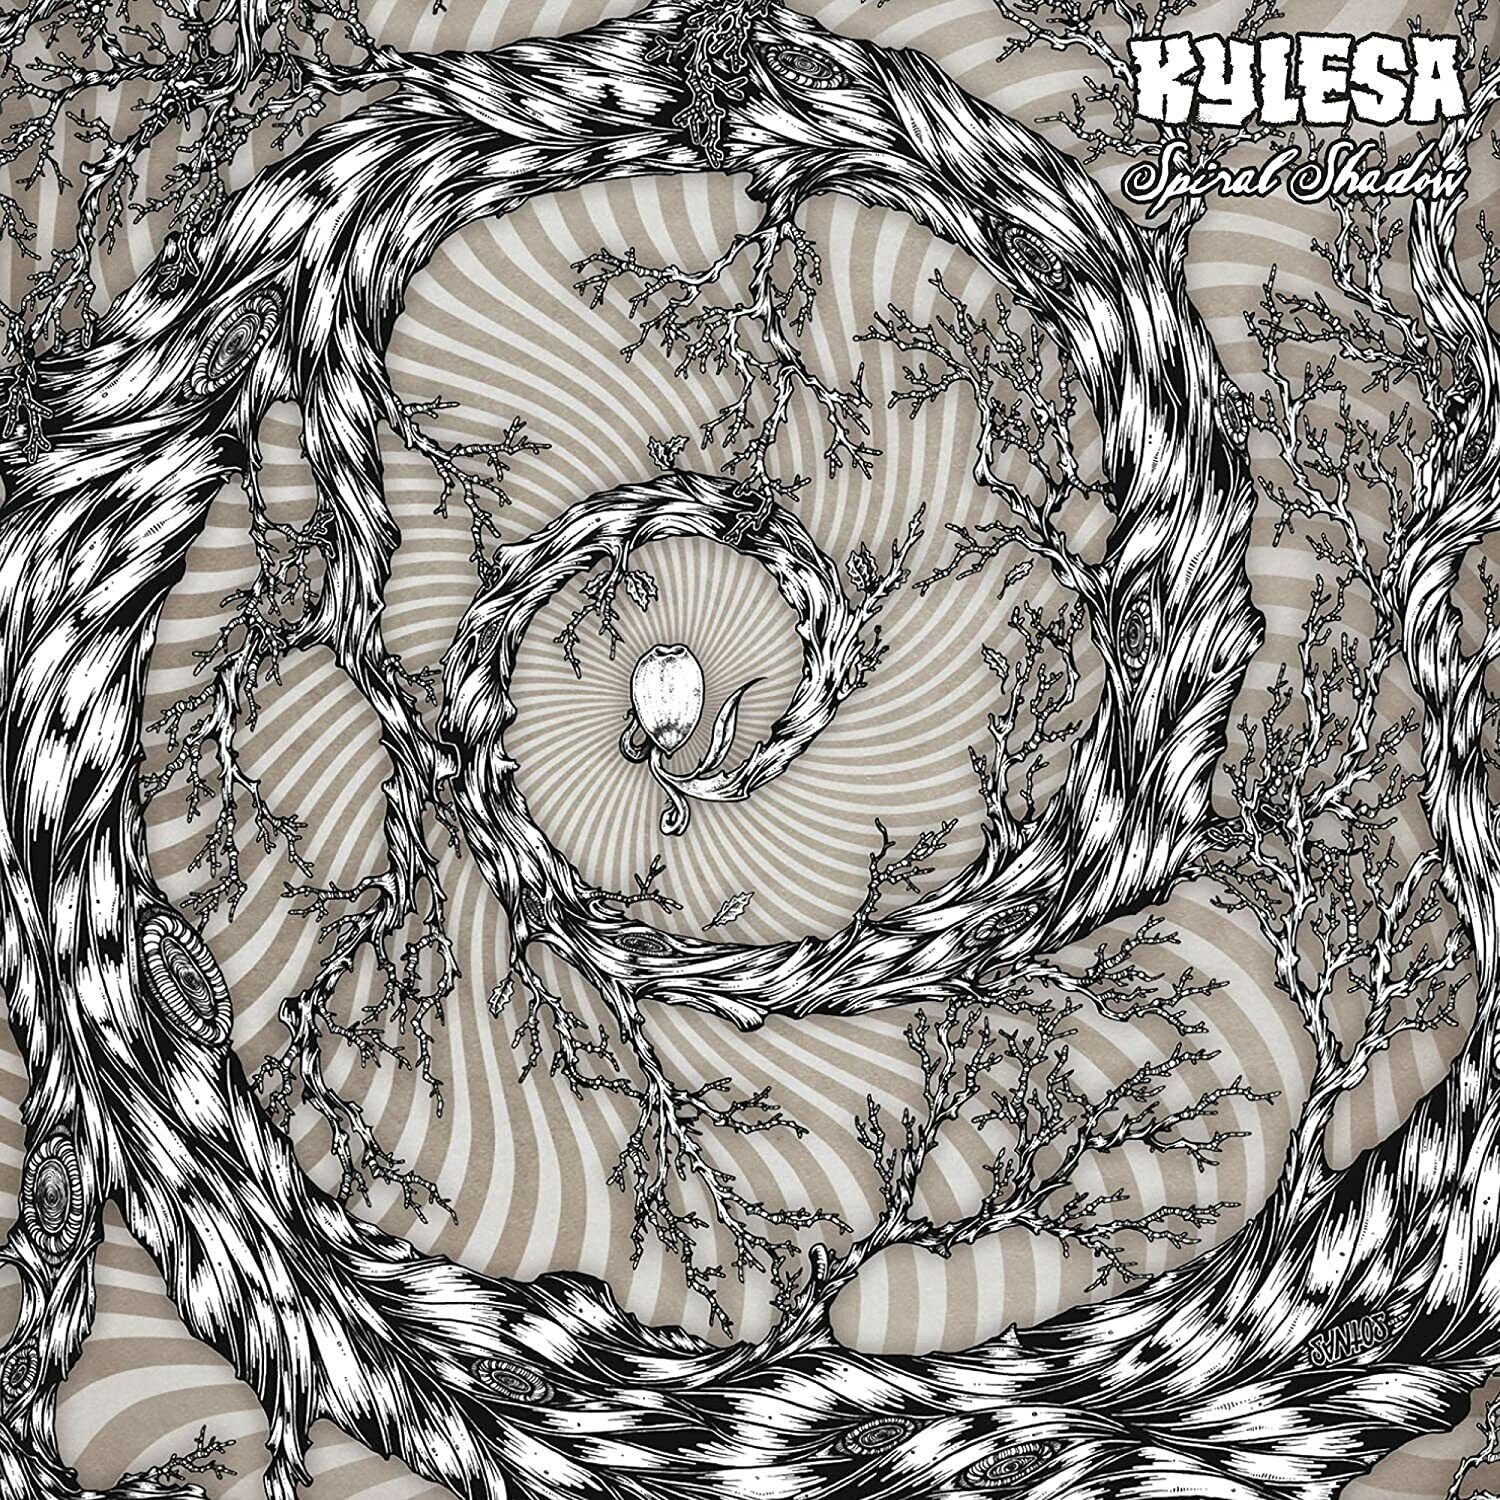 KYLESA - Spiral Shadow [CD]